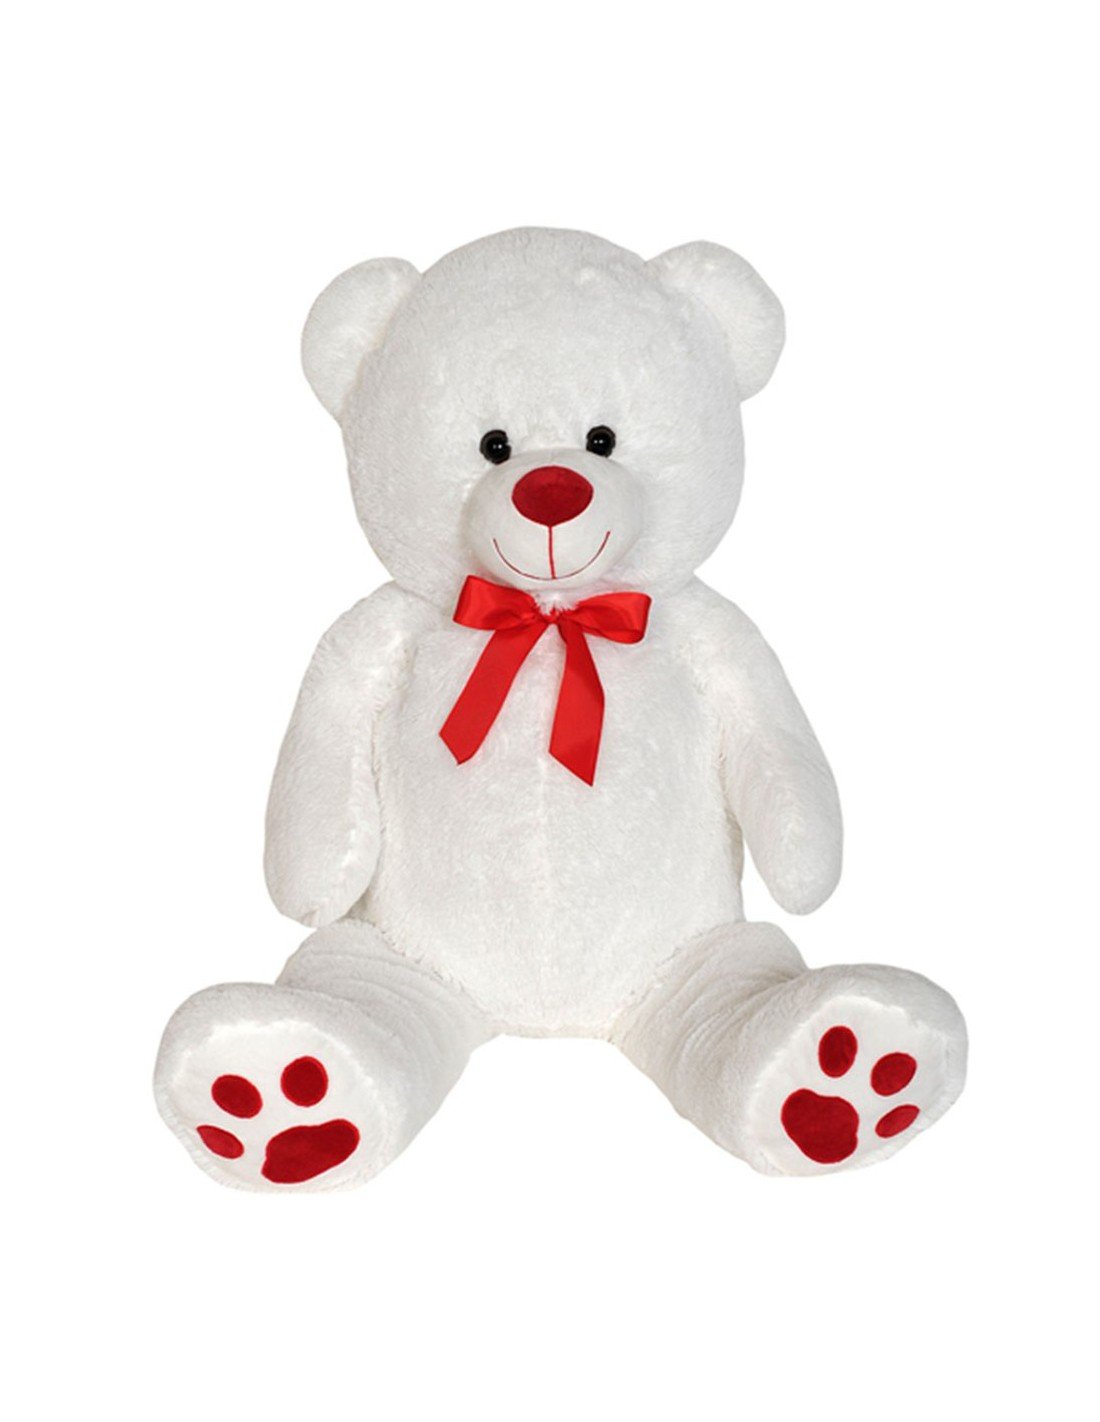 White teddy bear 120cm!